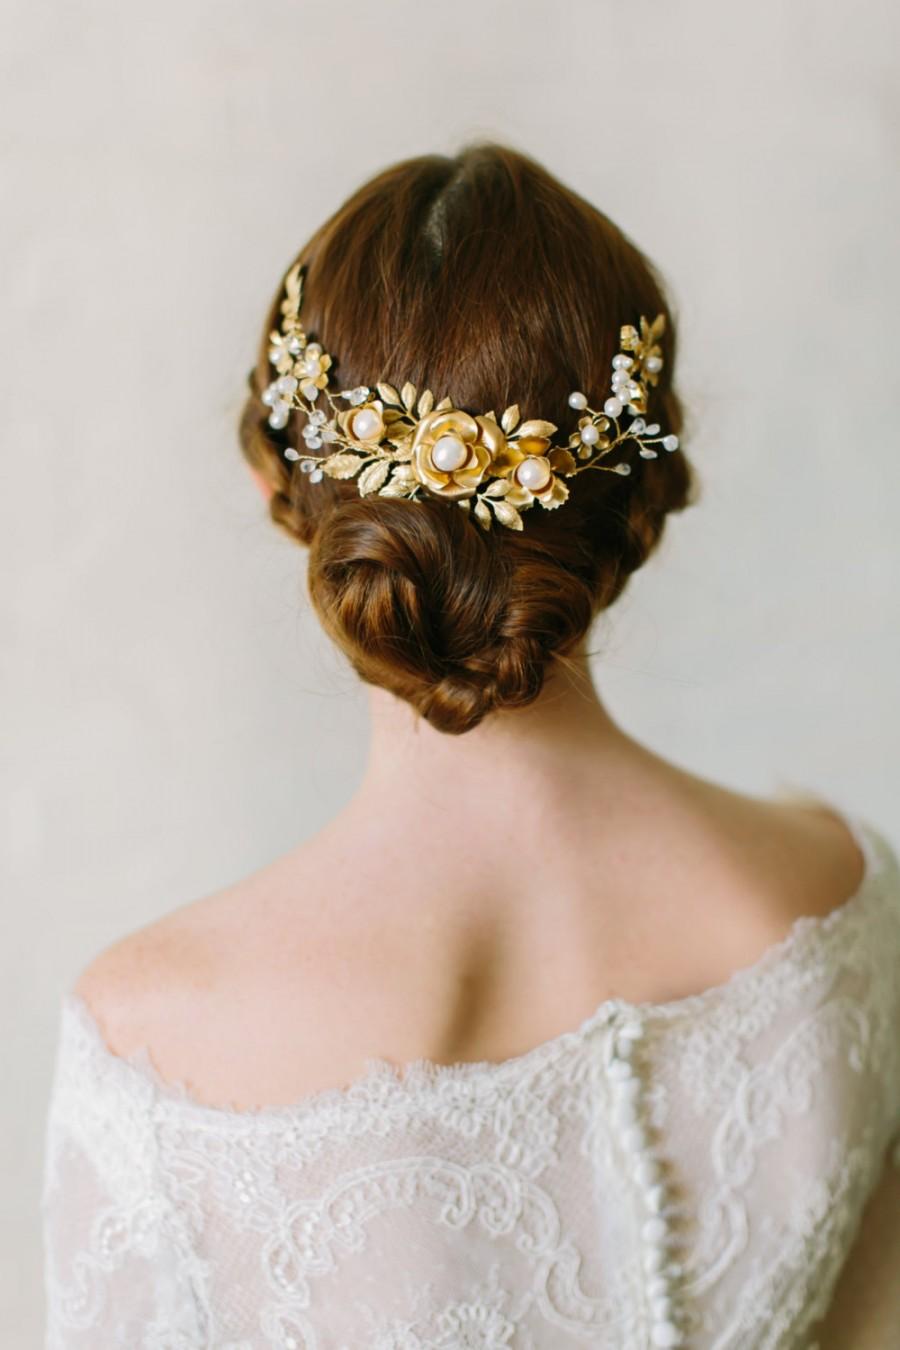 Wedding - OCTAVIA romantic floral bridal headpiece, bohemian wedding comb, boho gold hair accessory with pearls, moonstone, crystals